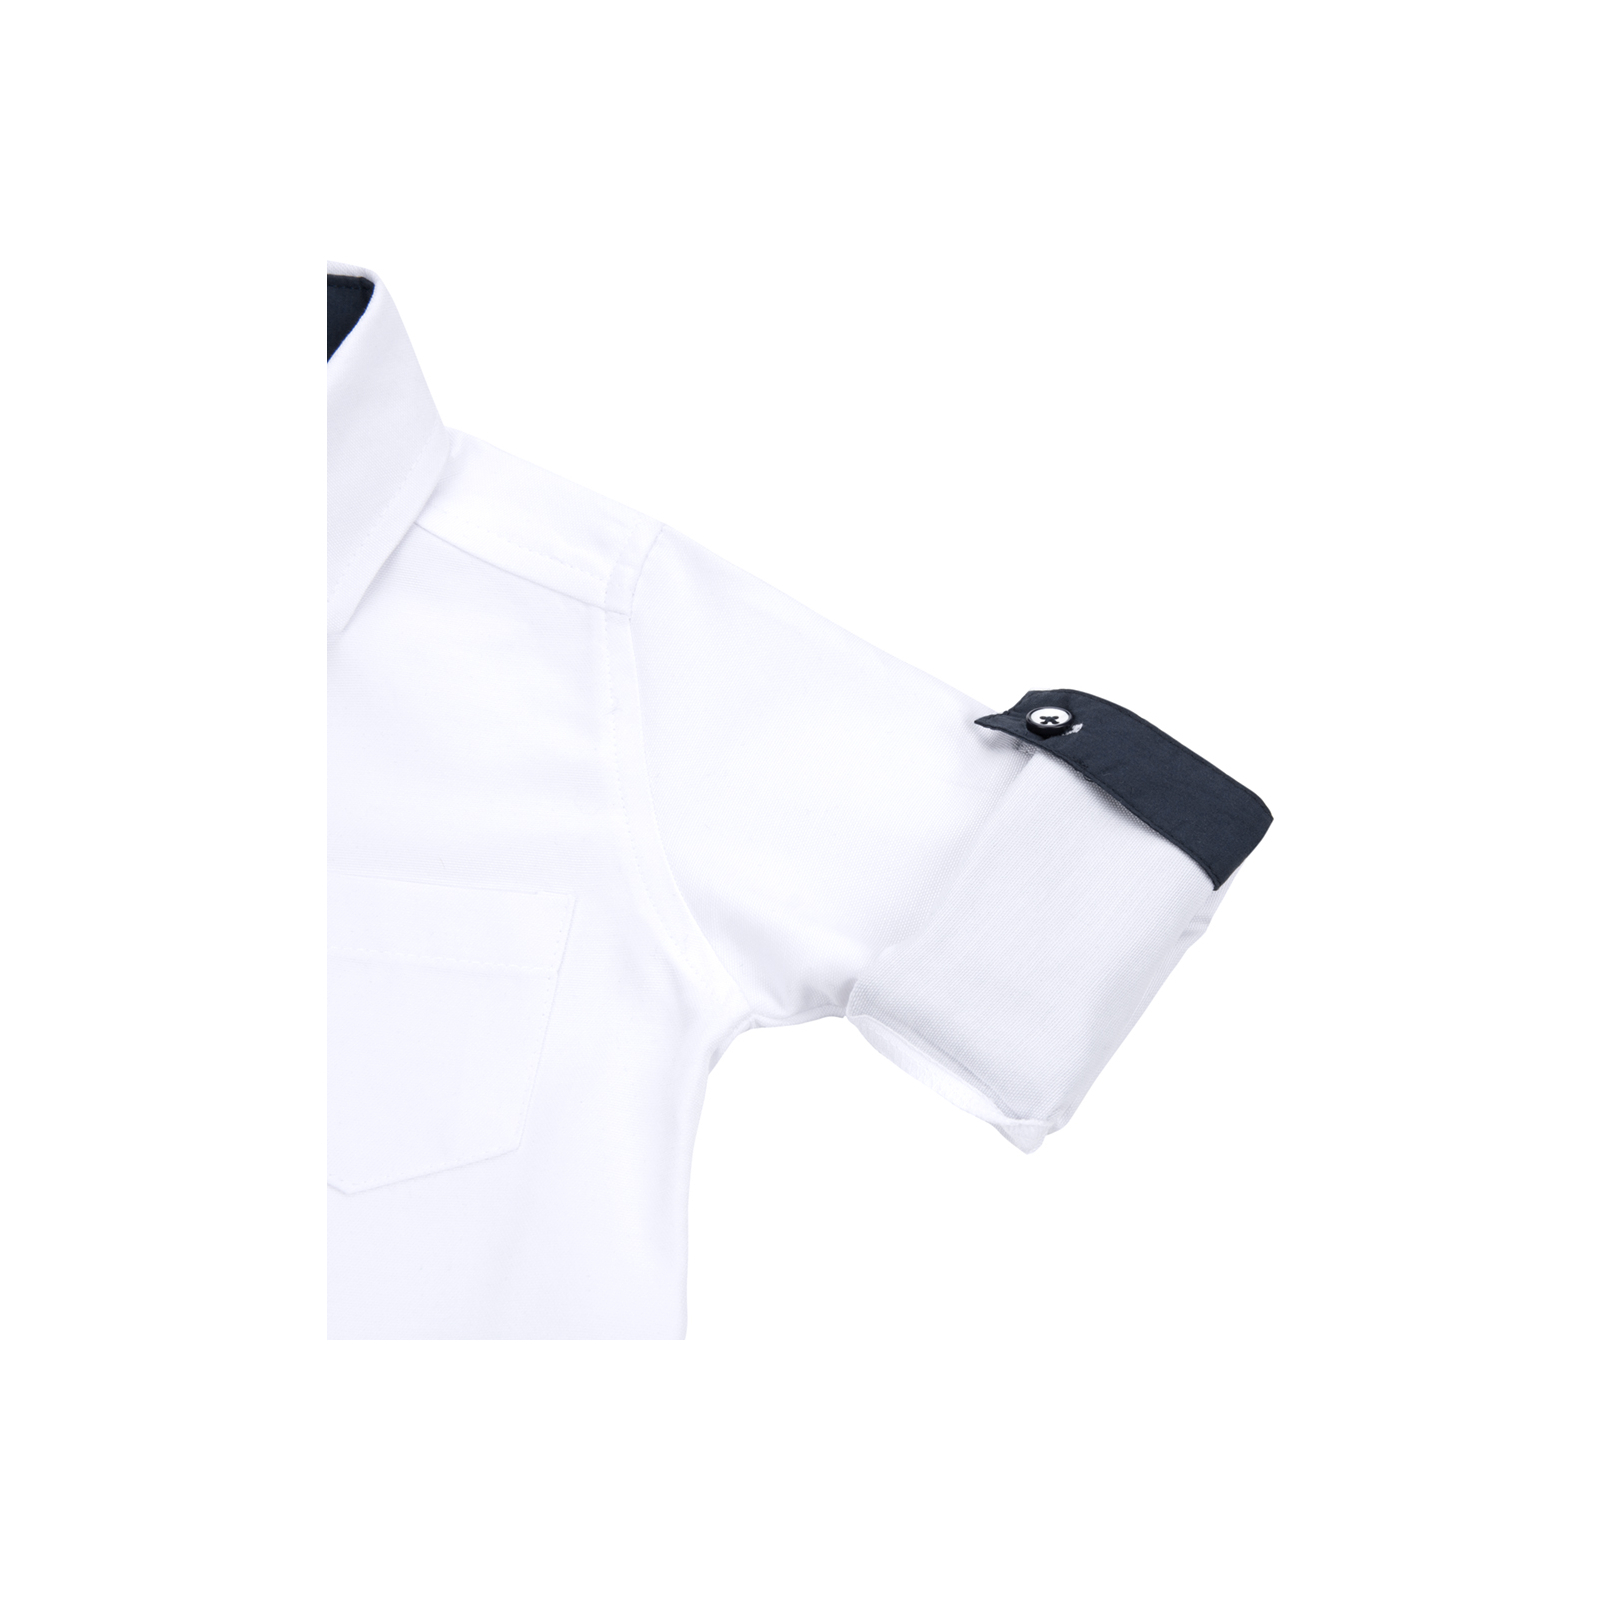 Рубашка Breeze белая (G-218-92B-white) изображение 3